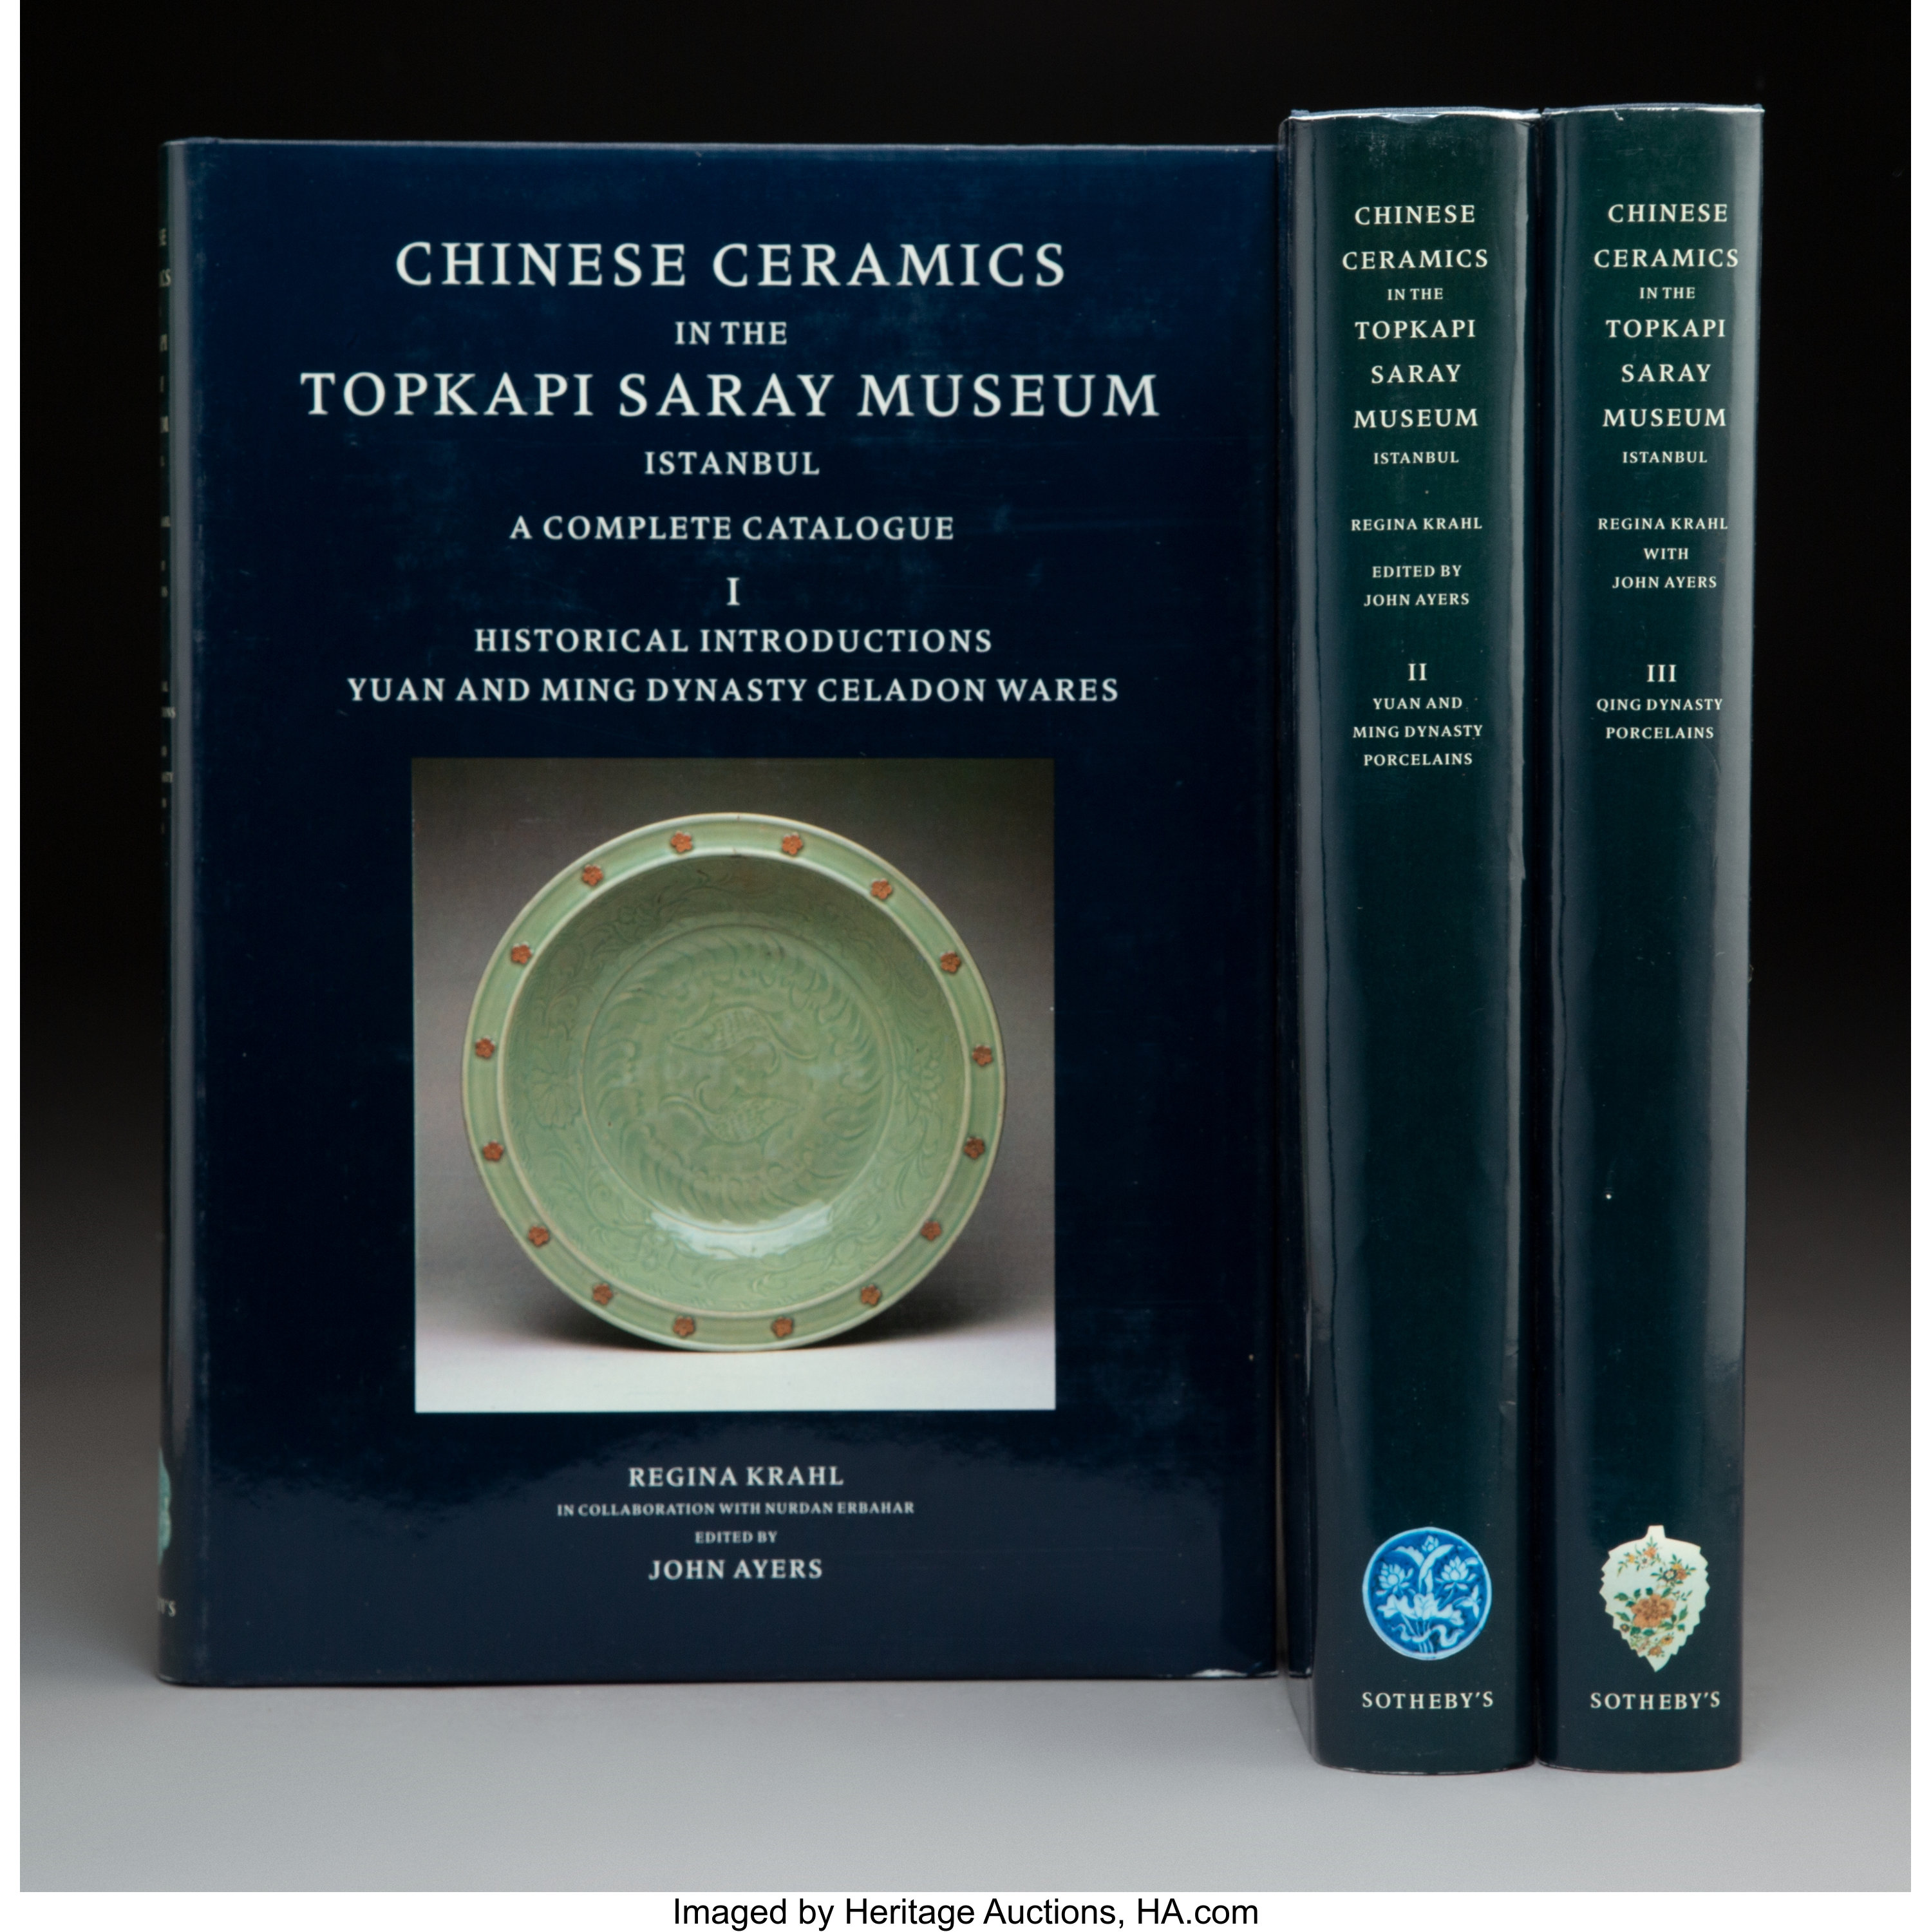 A Three Volume Set of Chinese Ceramics in the Topkapi Saray Museum